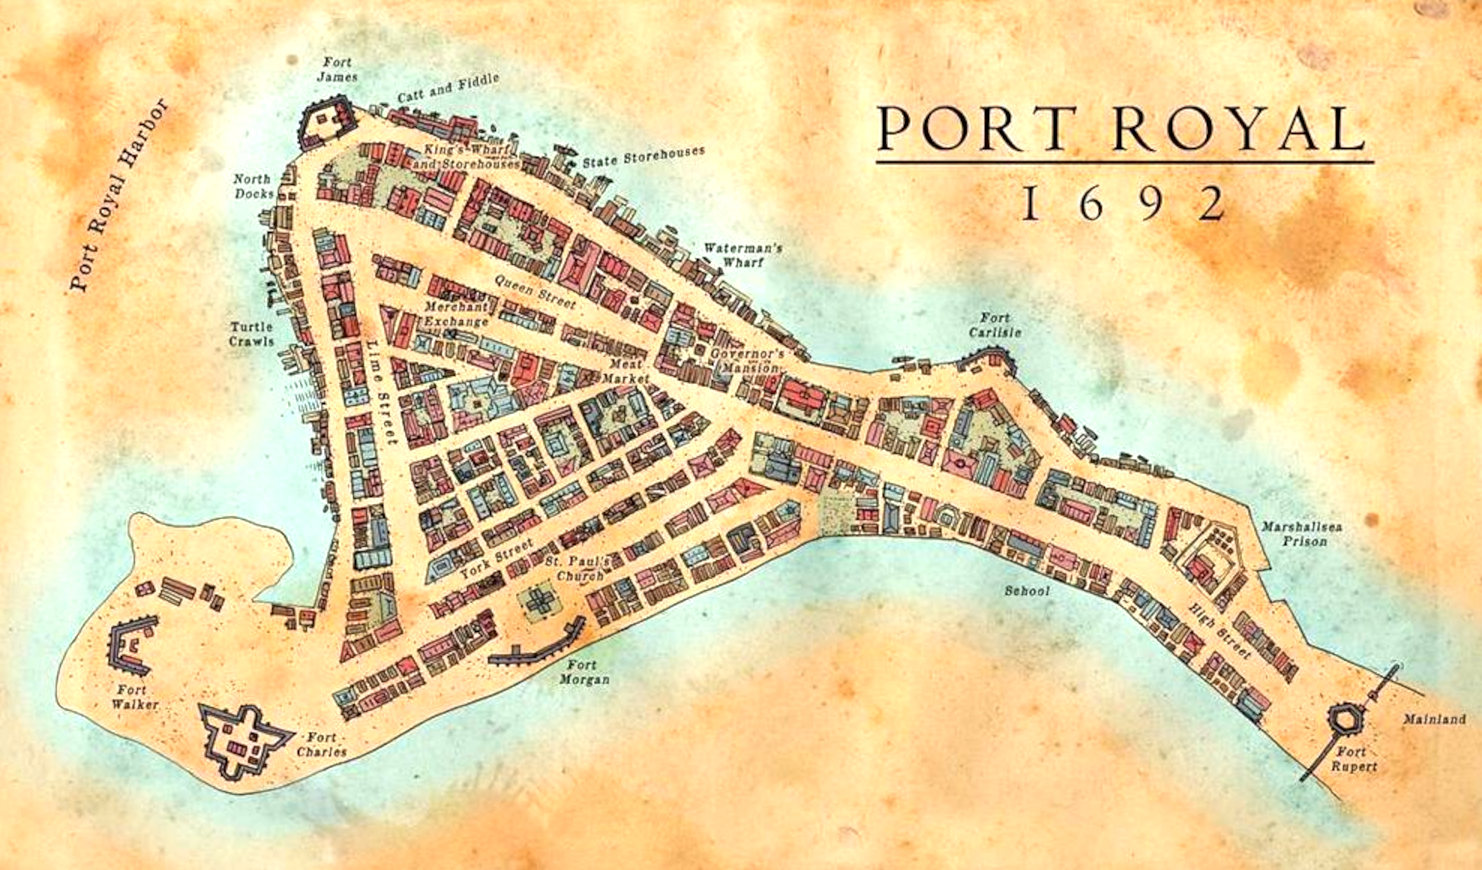 Port Royal, Jamaica, 1692 map.